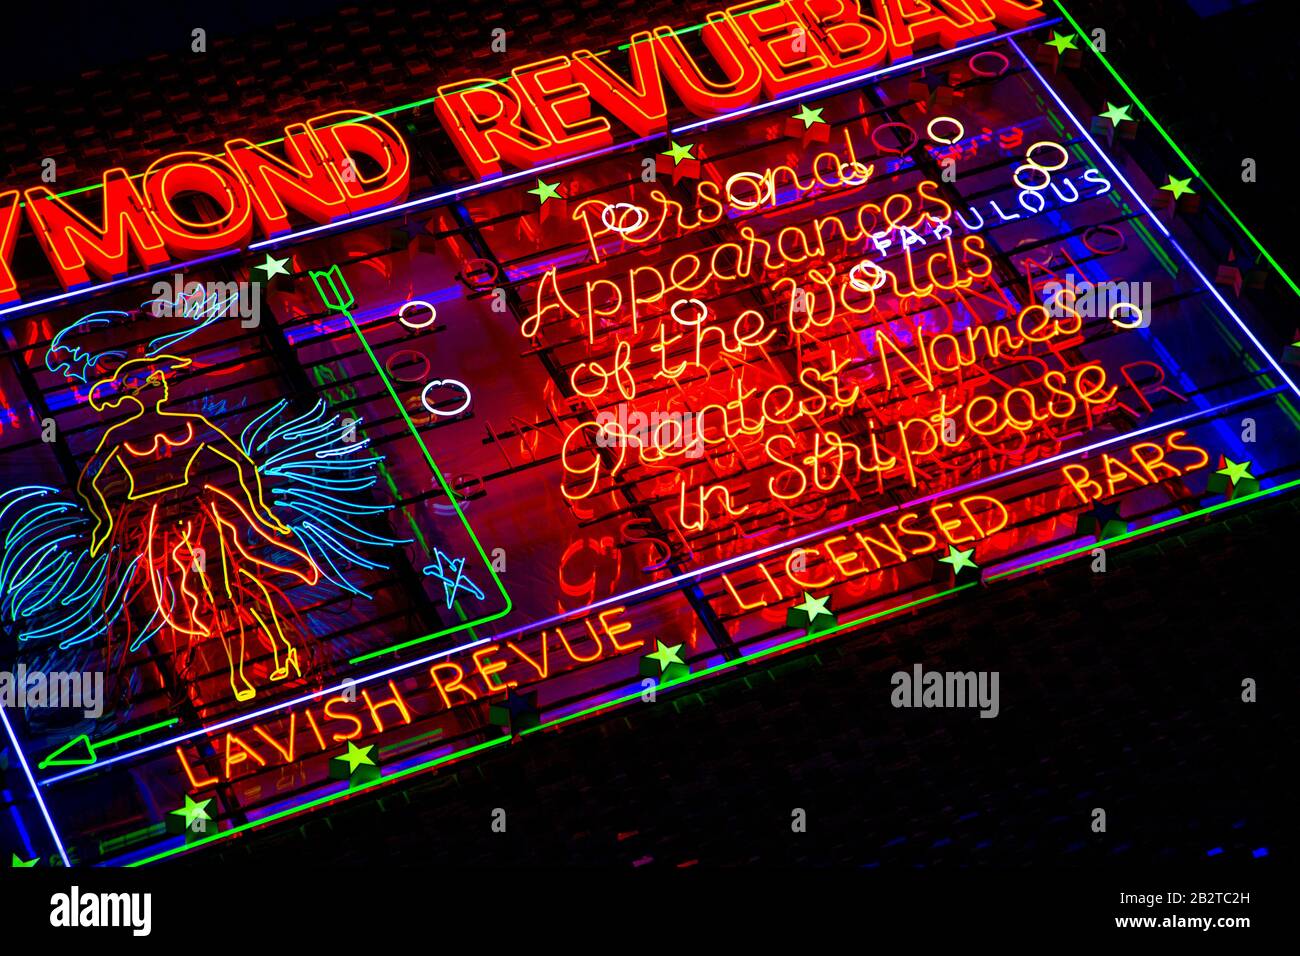 Neon sign for Raymond Revuebar strip club in Soho, London, UK Stock Photo